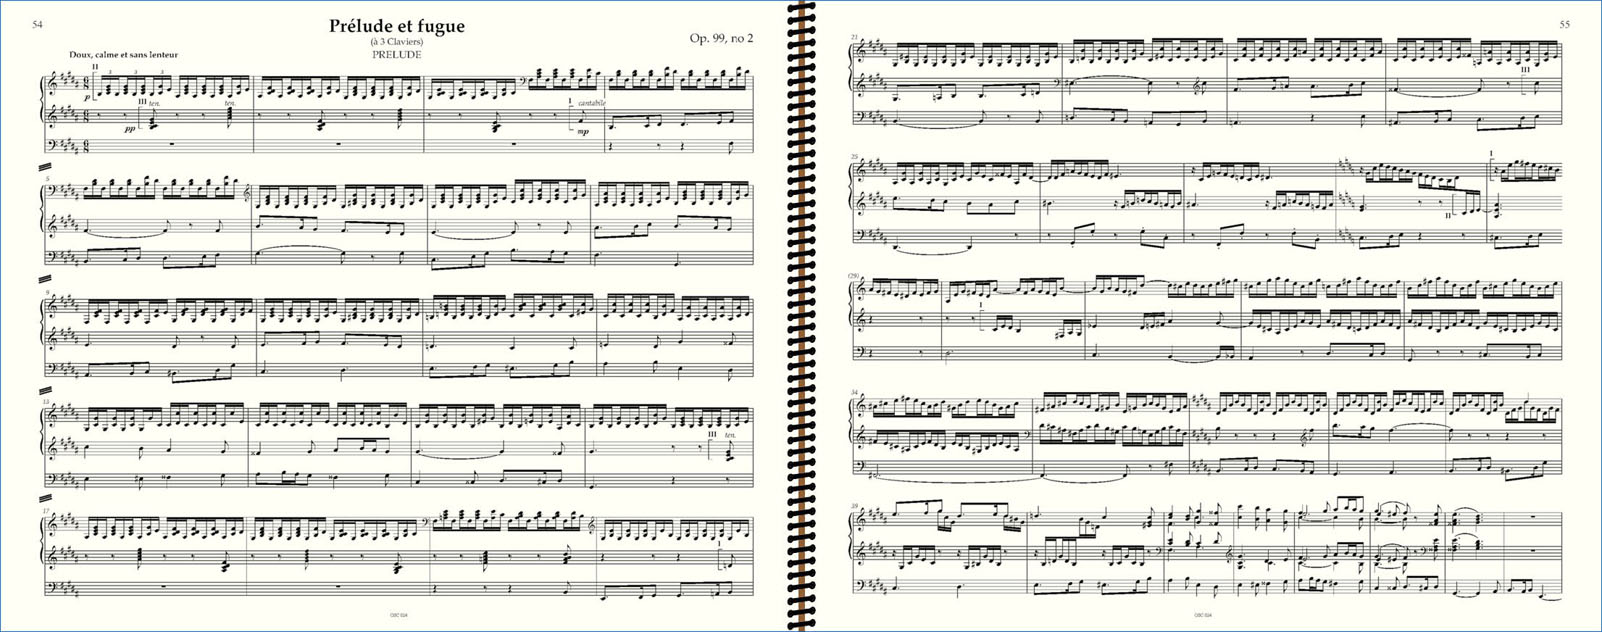 Saint-Saëns Complete Organ Works - OrganScore